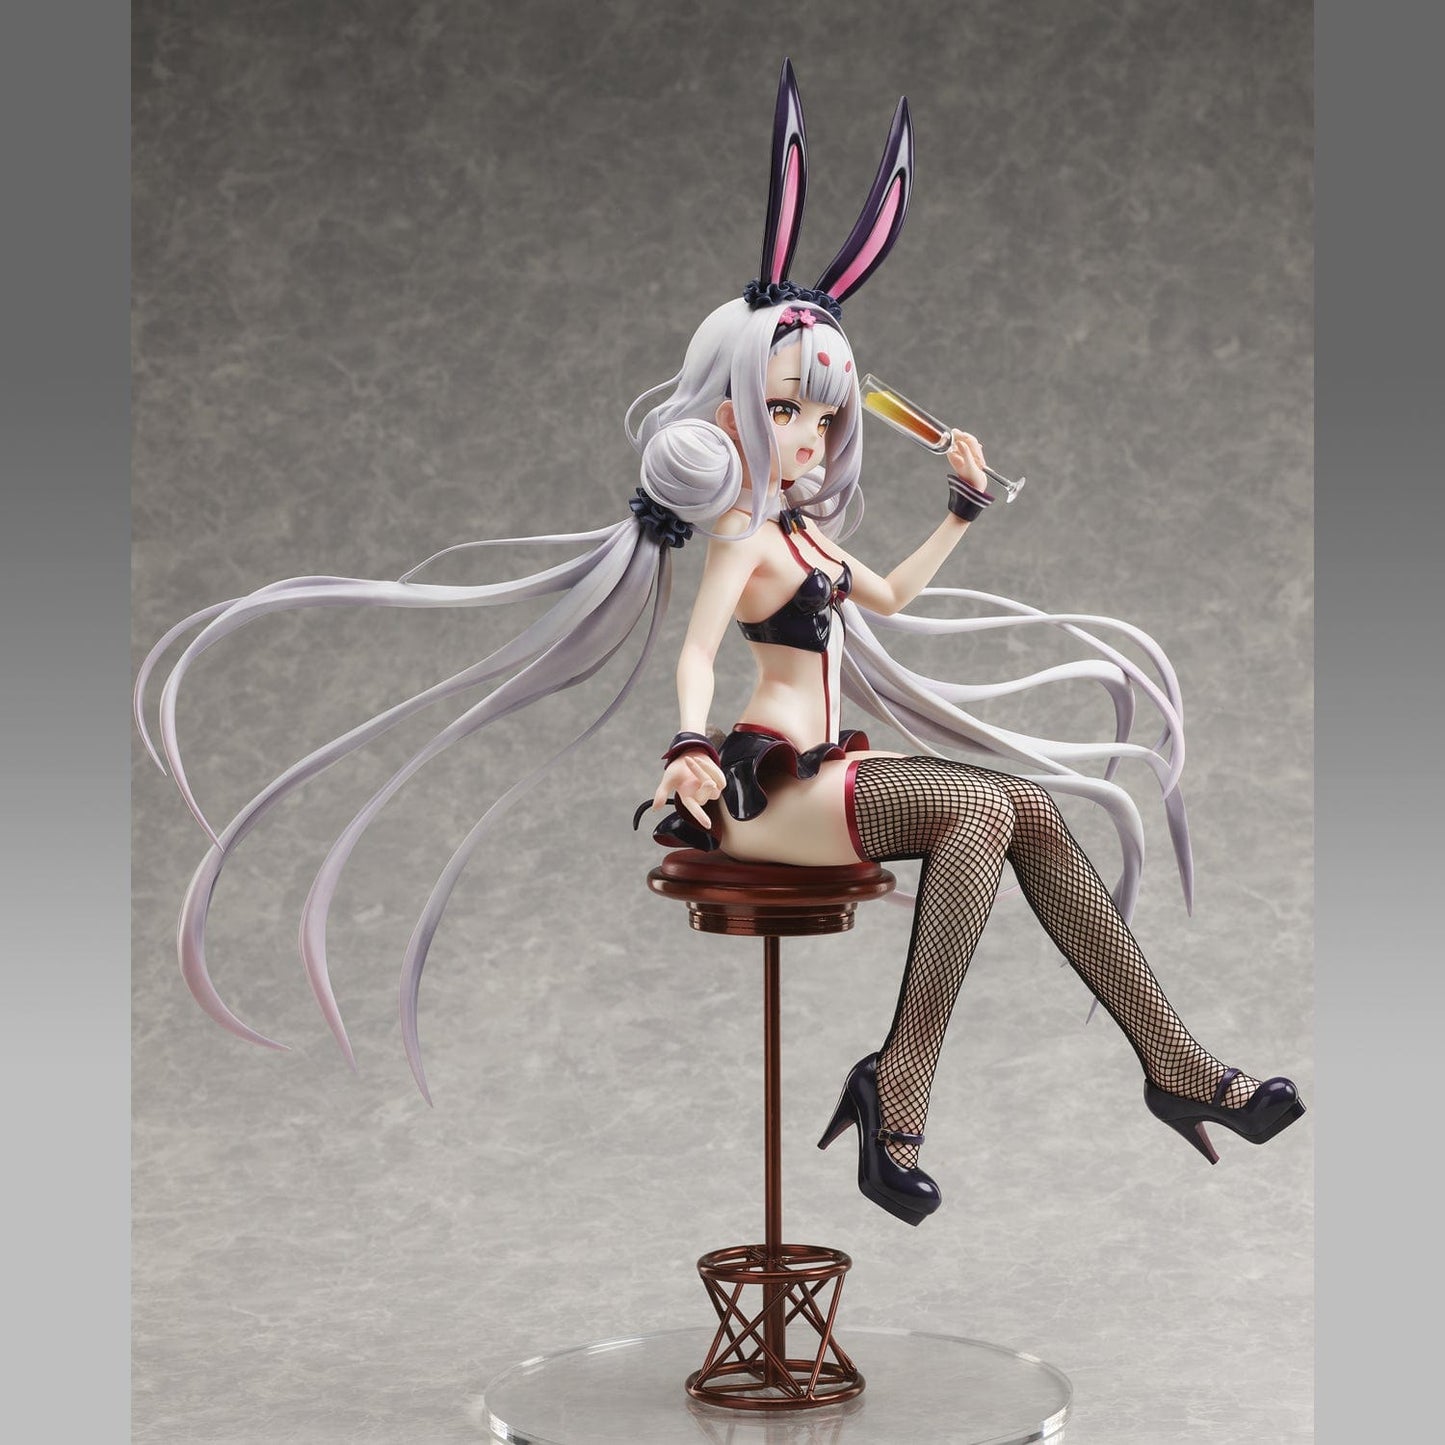 FREEING Azur Lane B-Style Shimakaze (World's Speediest Bunny Waitress Ver.) 1/4 Scale Figure